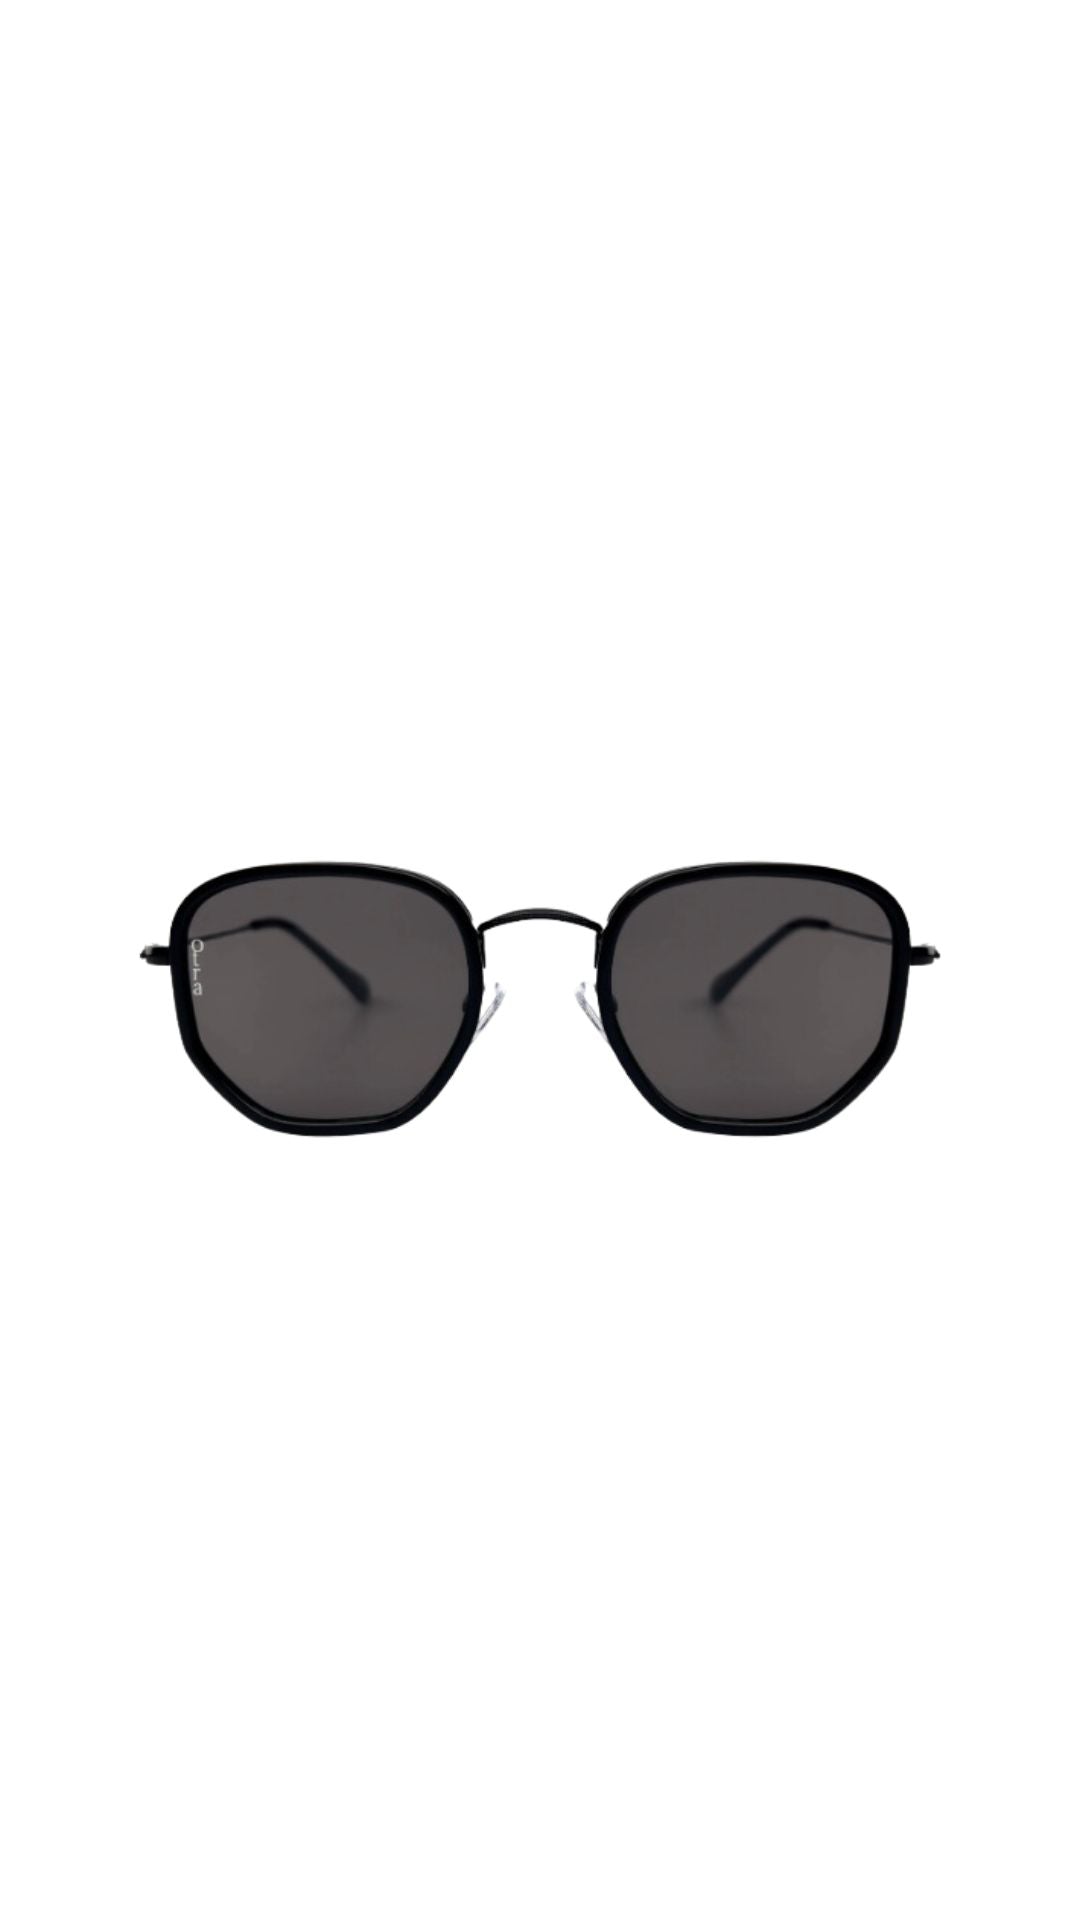 Tate Sunglasses